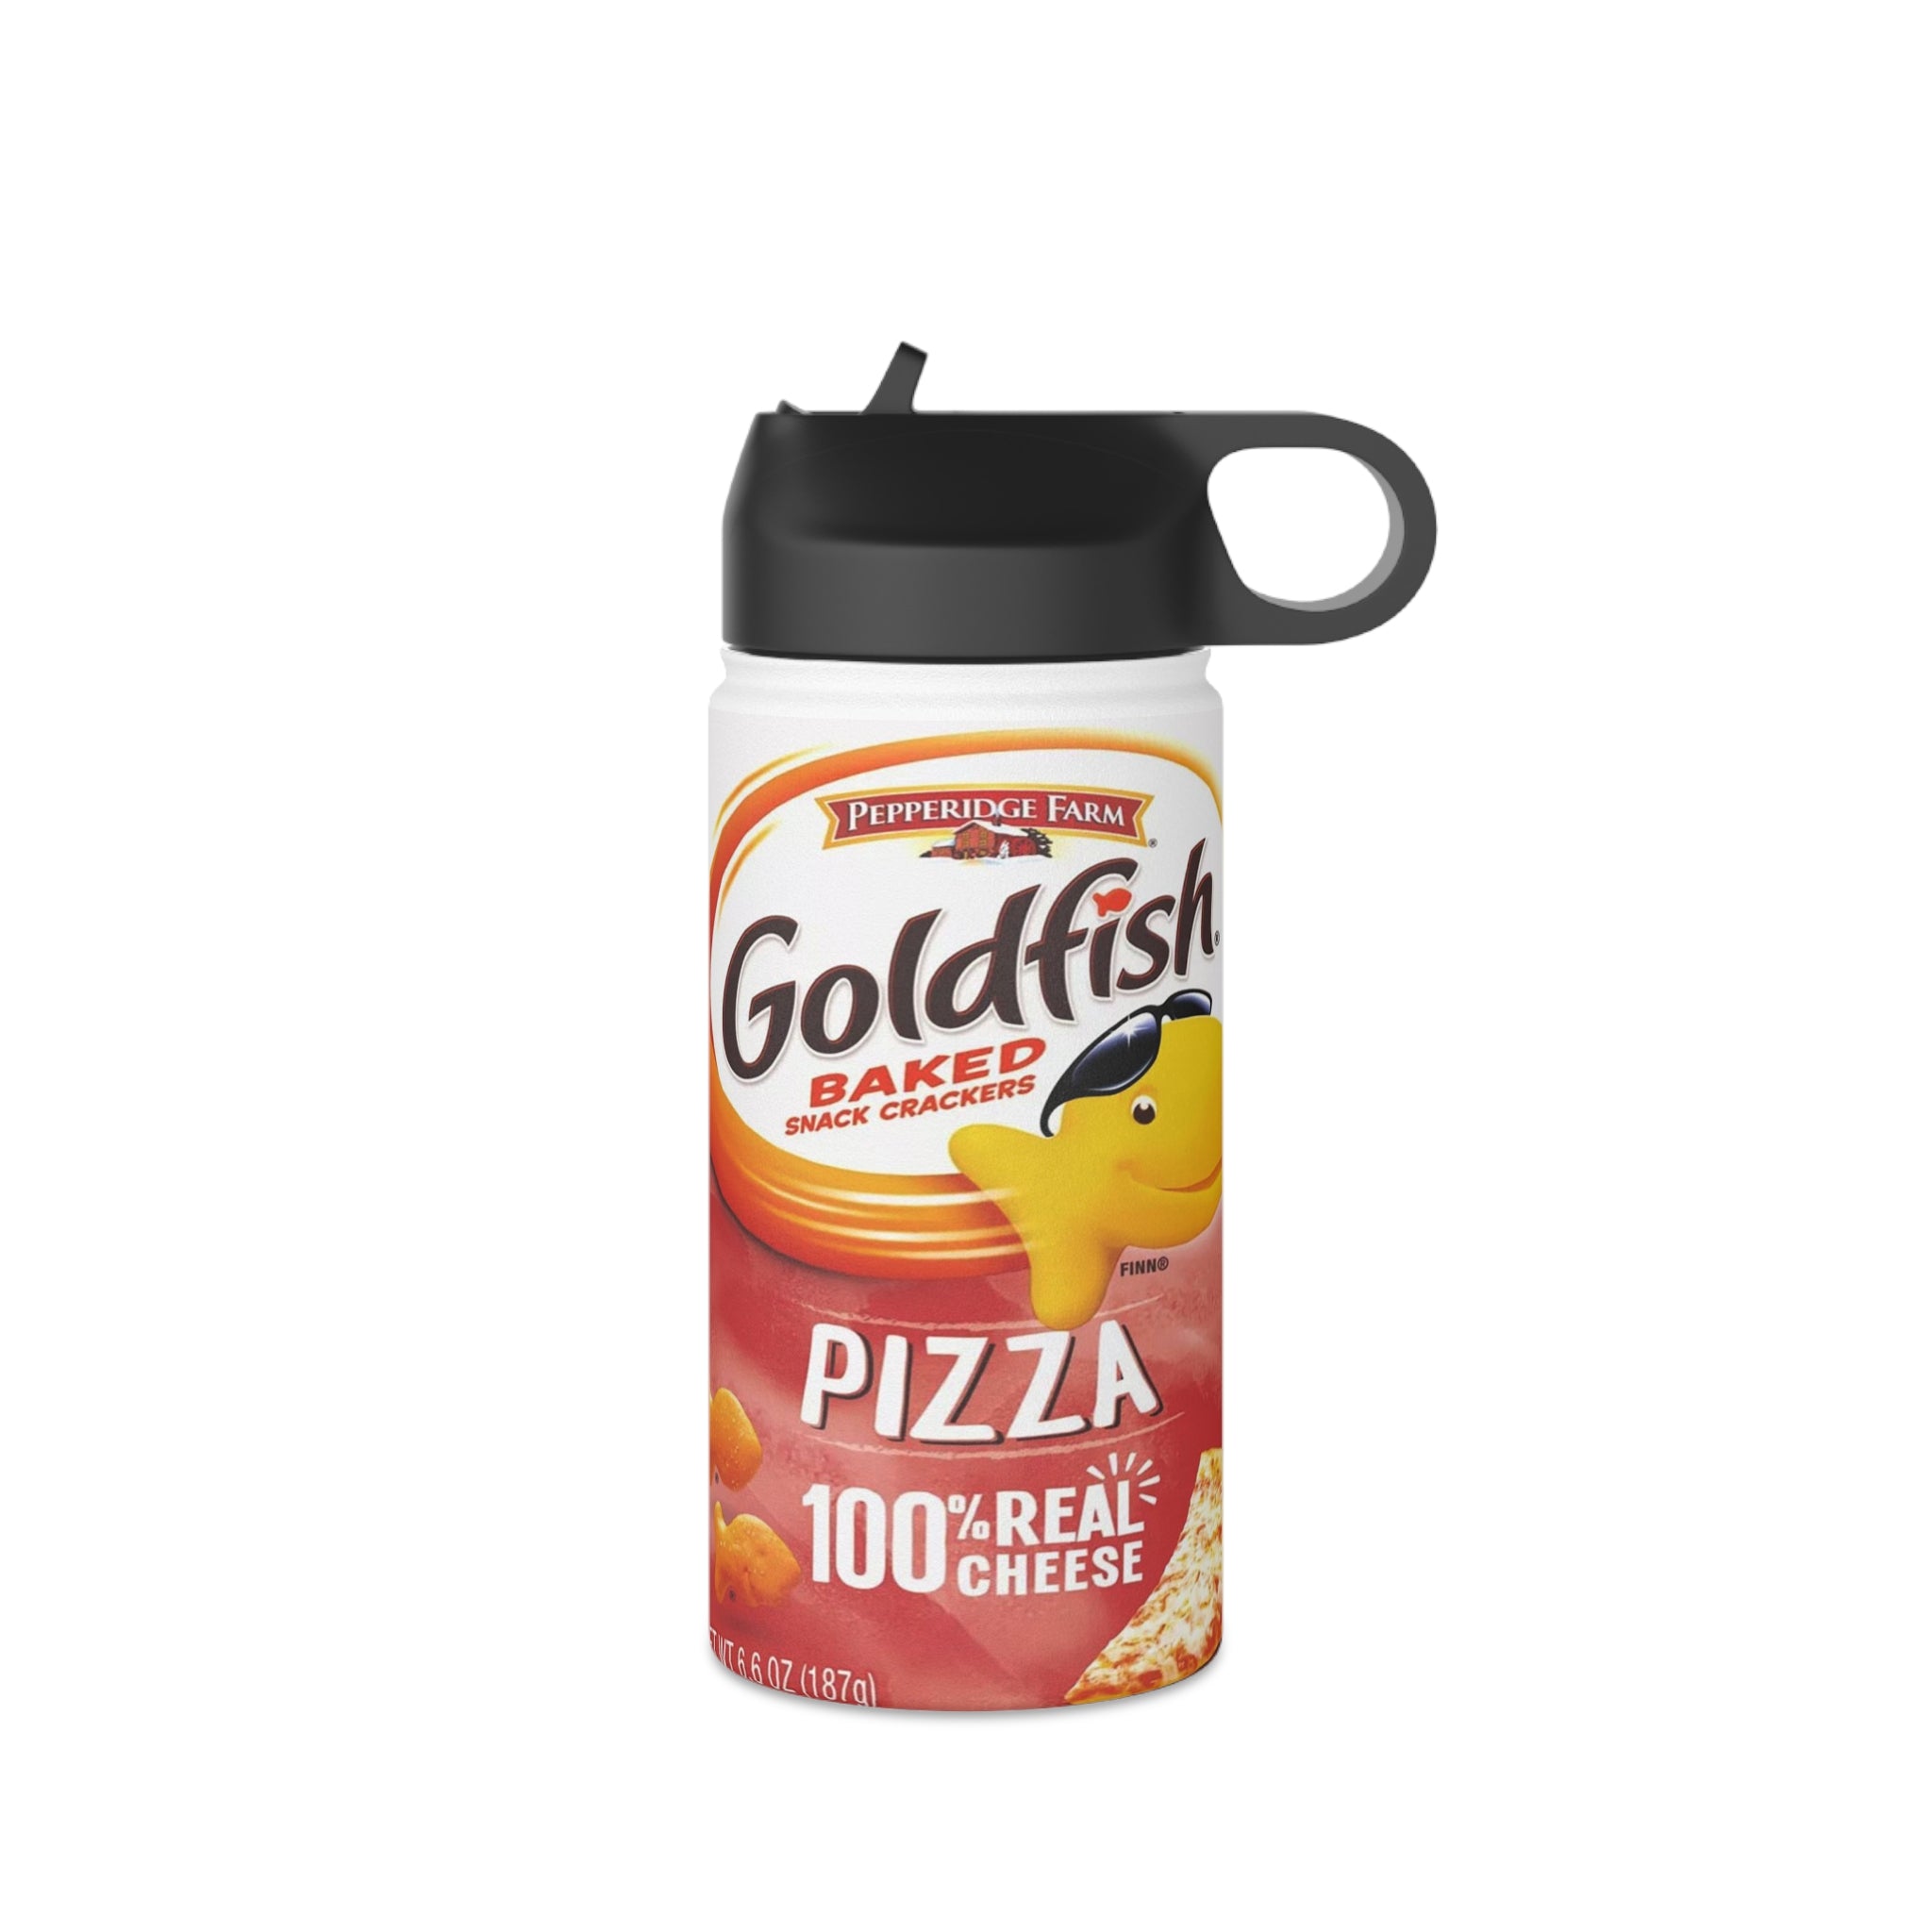 Goldfish baked pizza Stainless Steel Water Bottle, Standard Lid